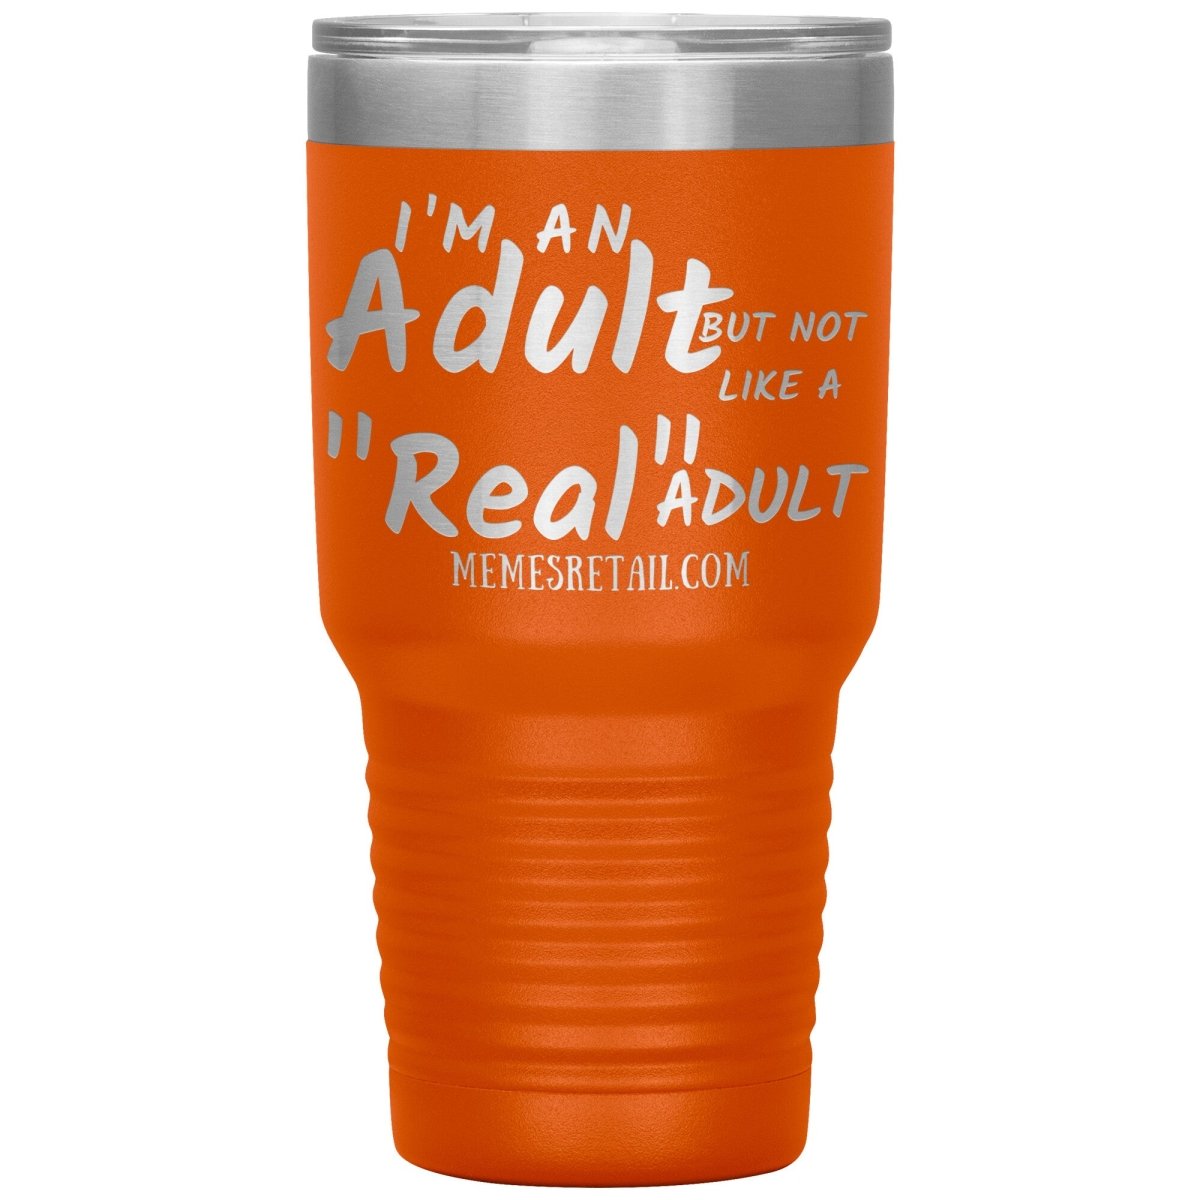 I'm an adult, but not like a "real" adult Tumblers, 30oz Insulated Tumbler / Orange - MemesRetail.com